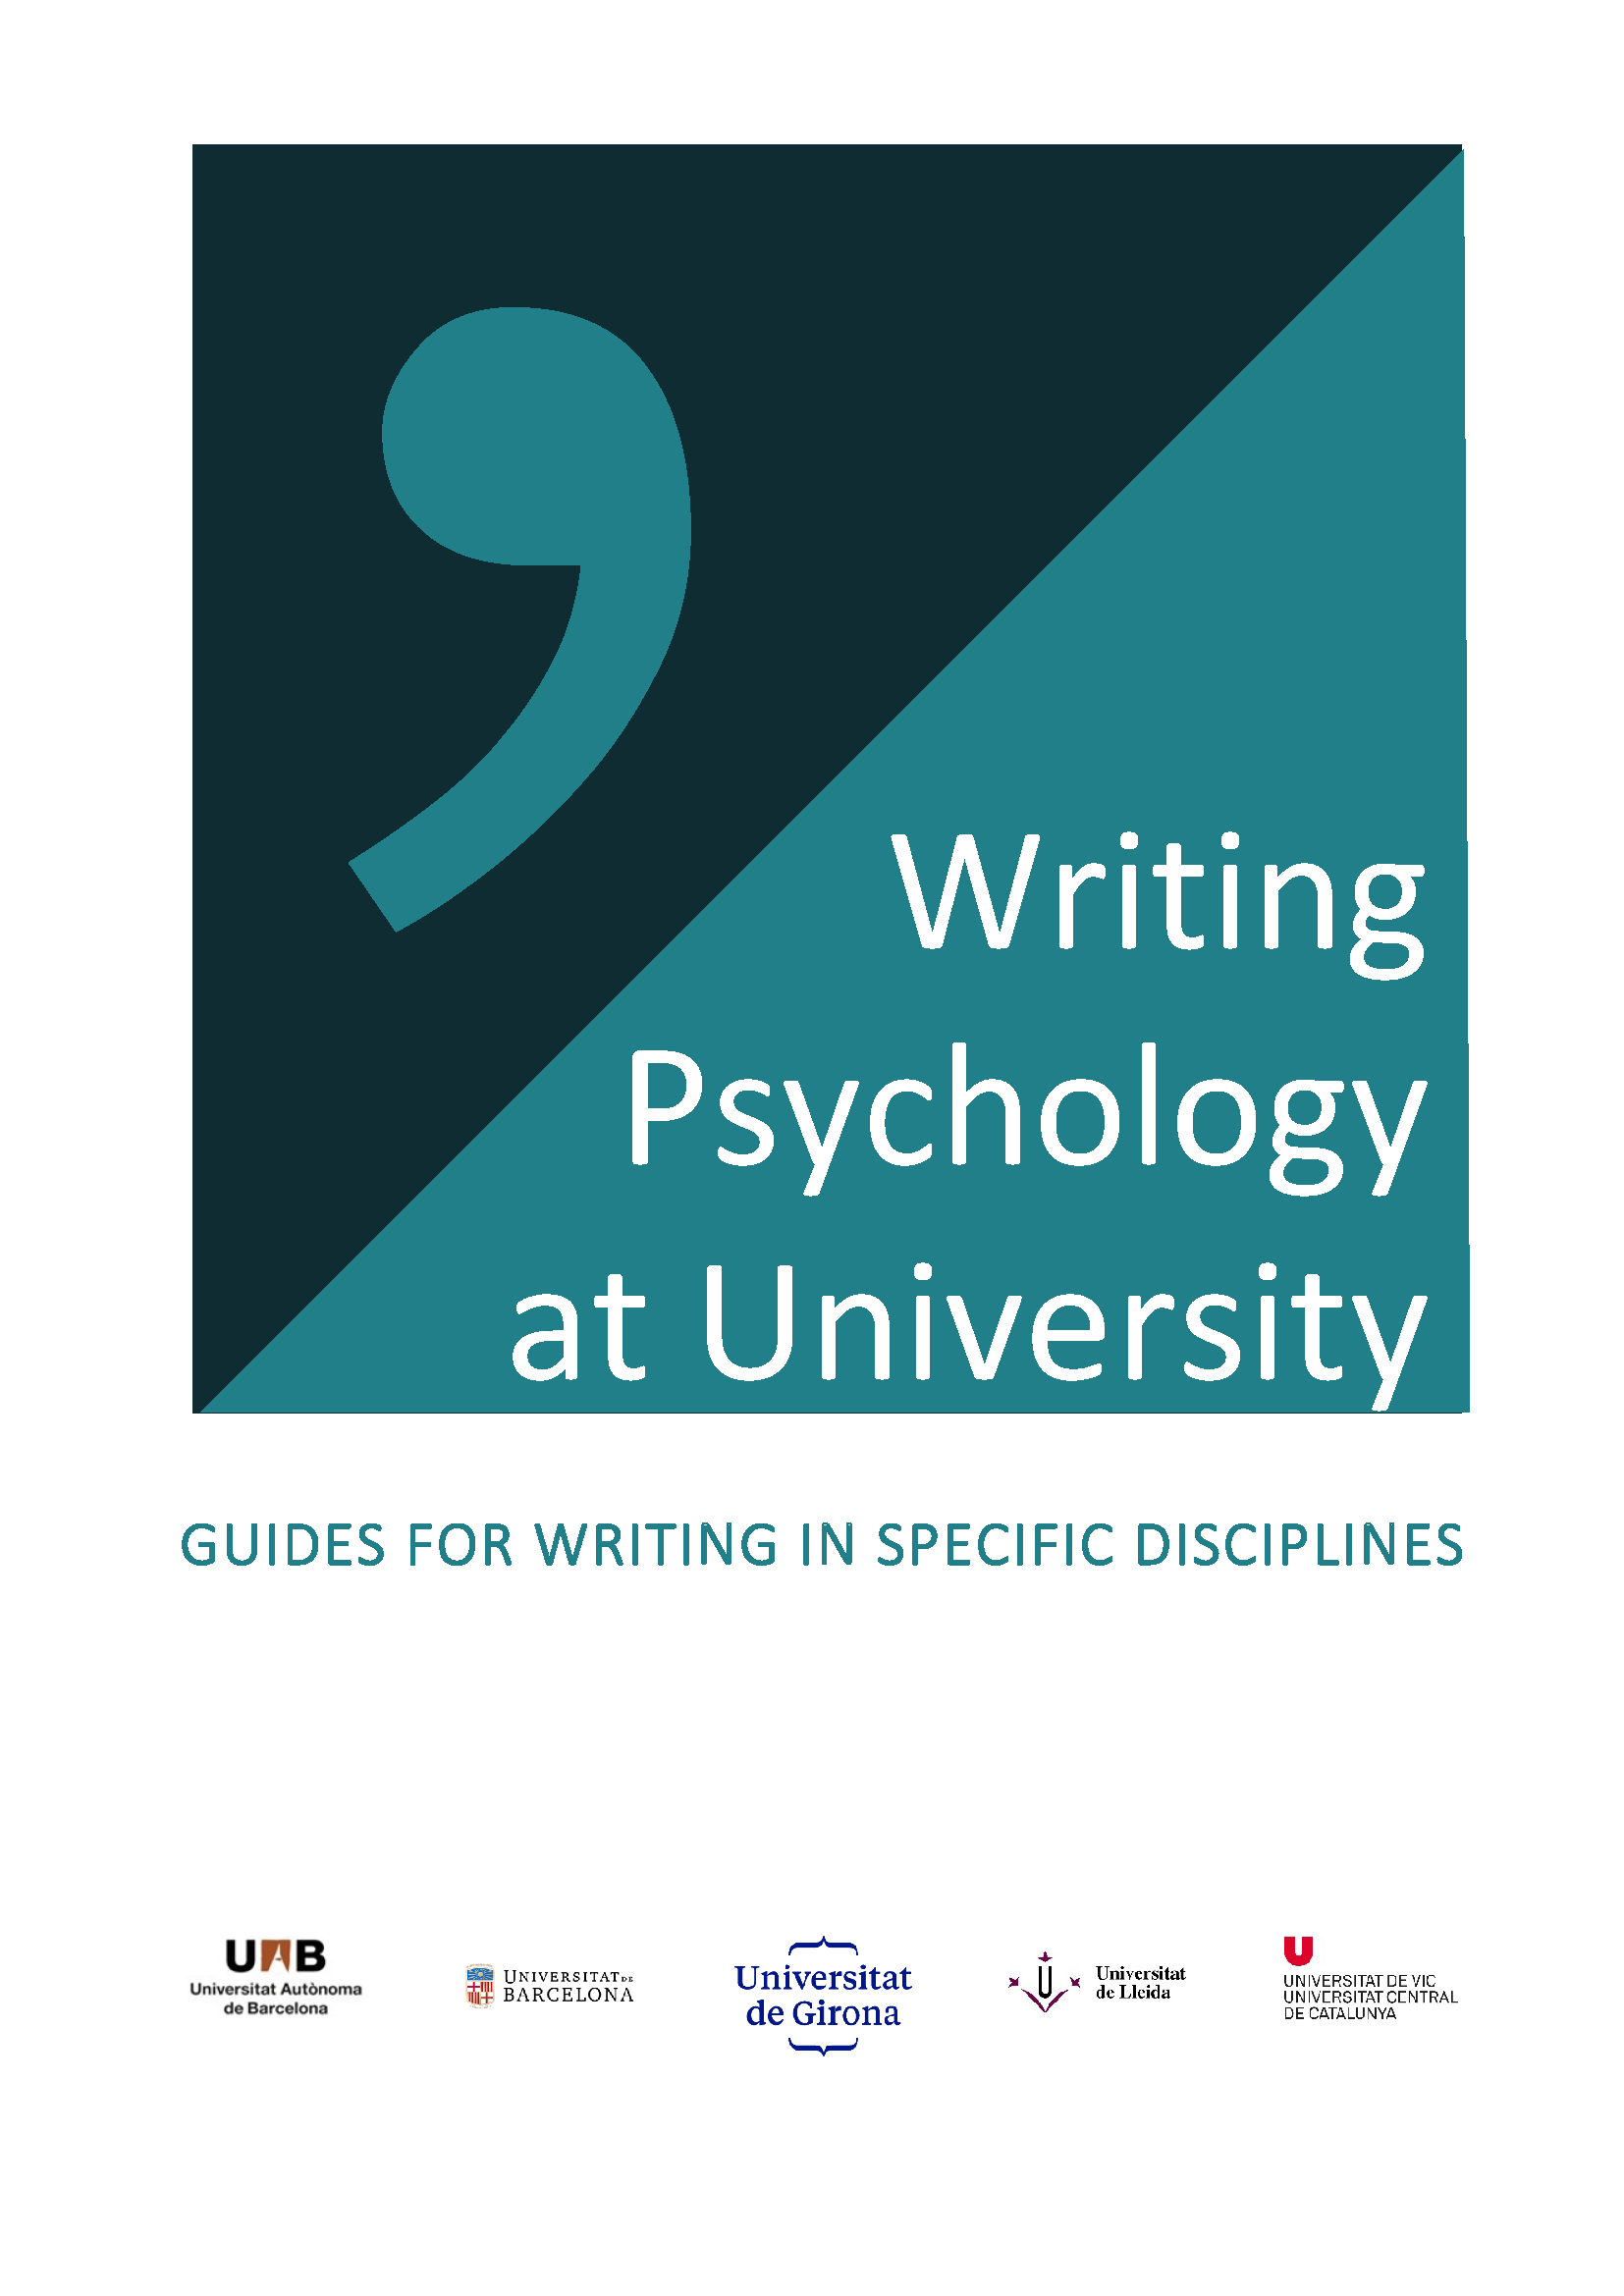 Writing Psychology at University